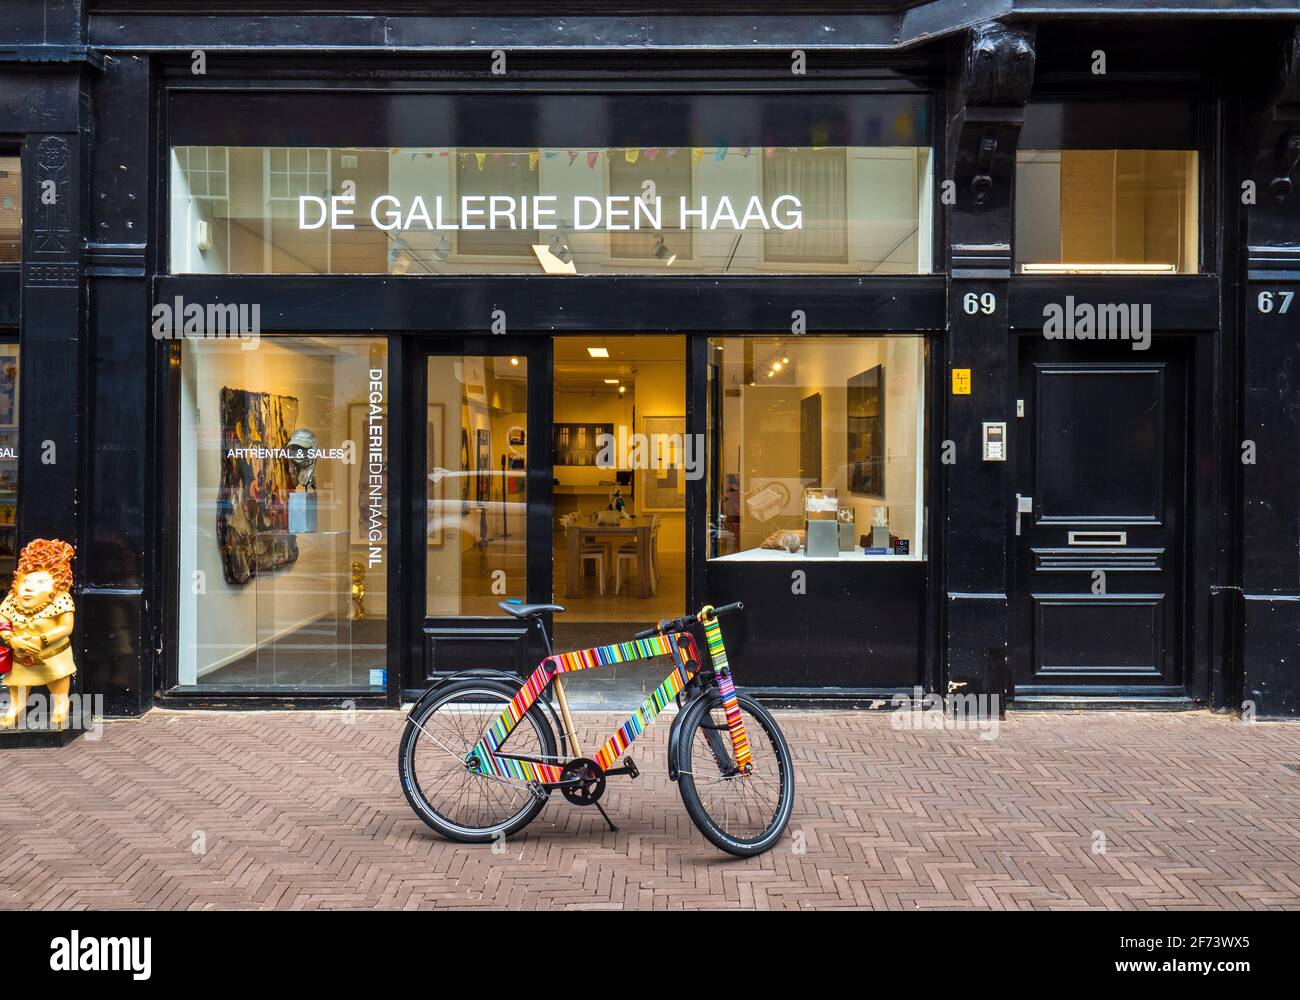 De Galerie Den Haag at Noordeinde 69-71 in Den Haag or The Hague, NL. Commercial Art Gallery & store specialising in modern contemporary art. Stock Photo